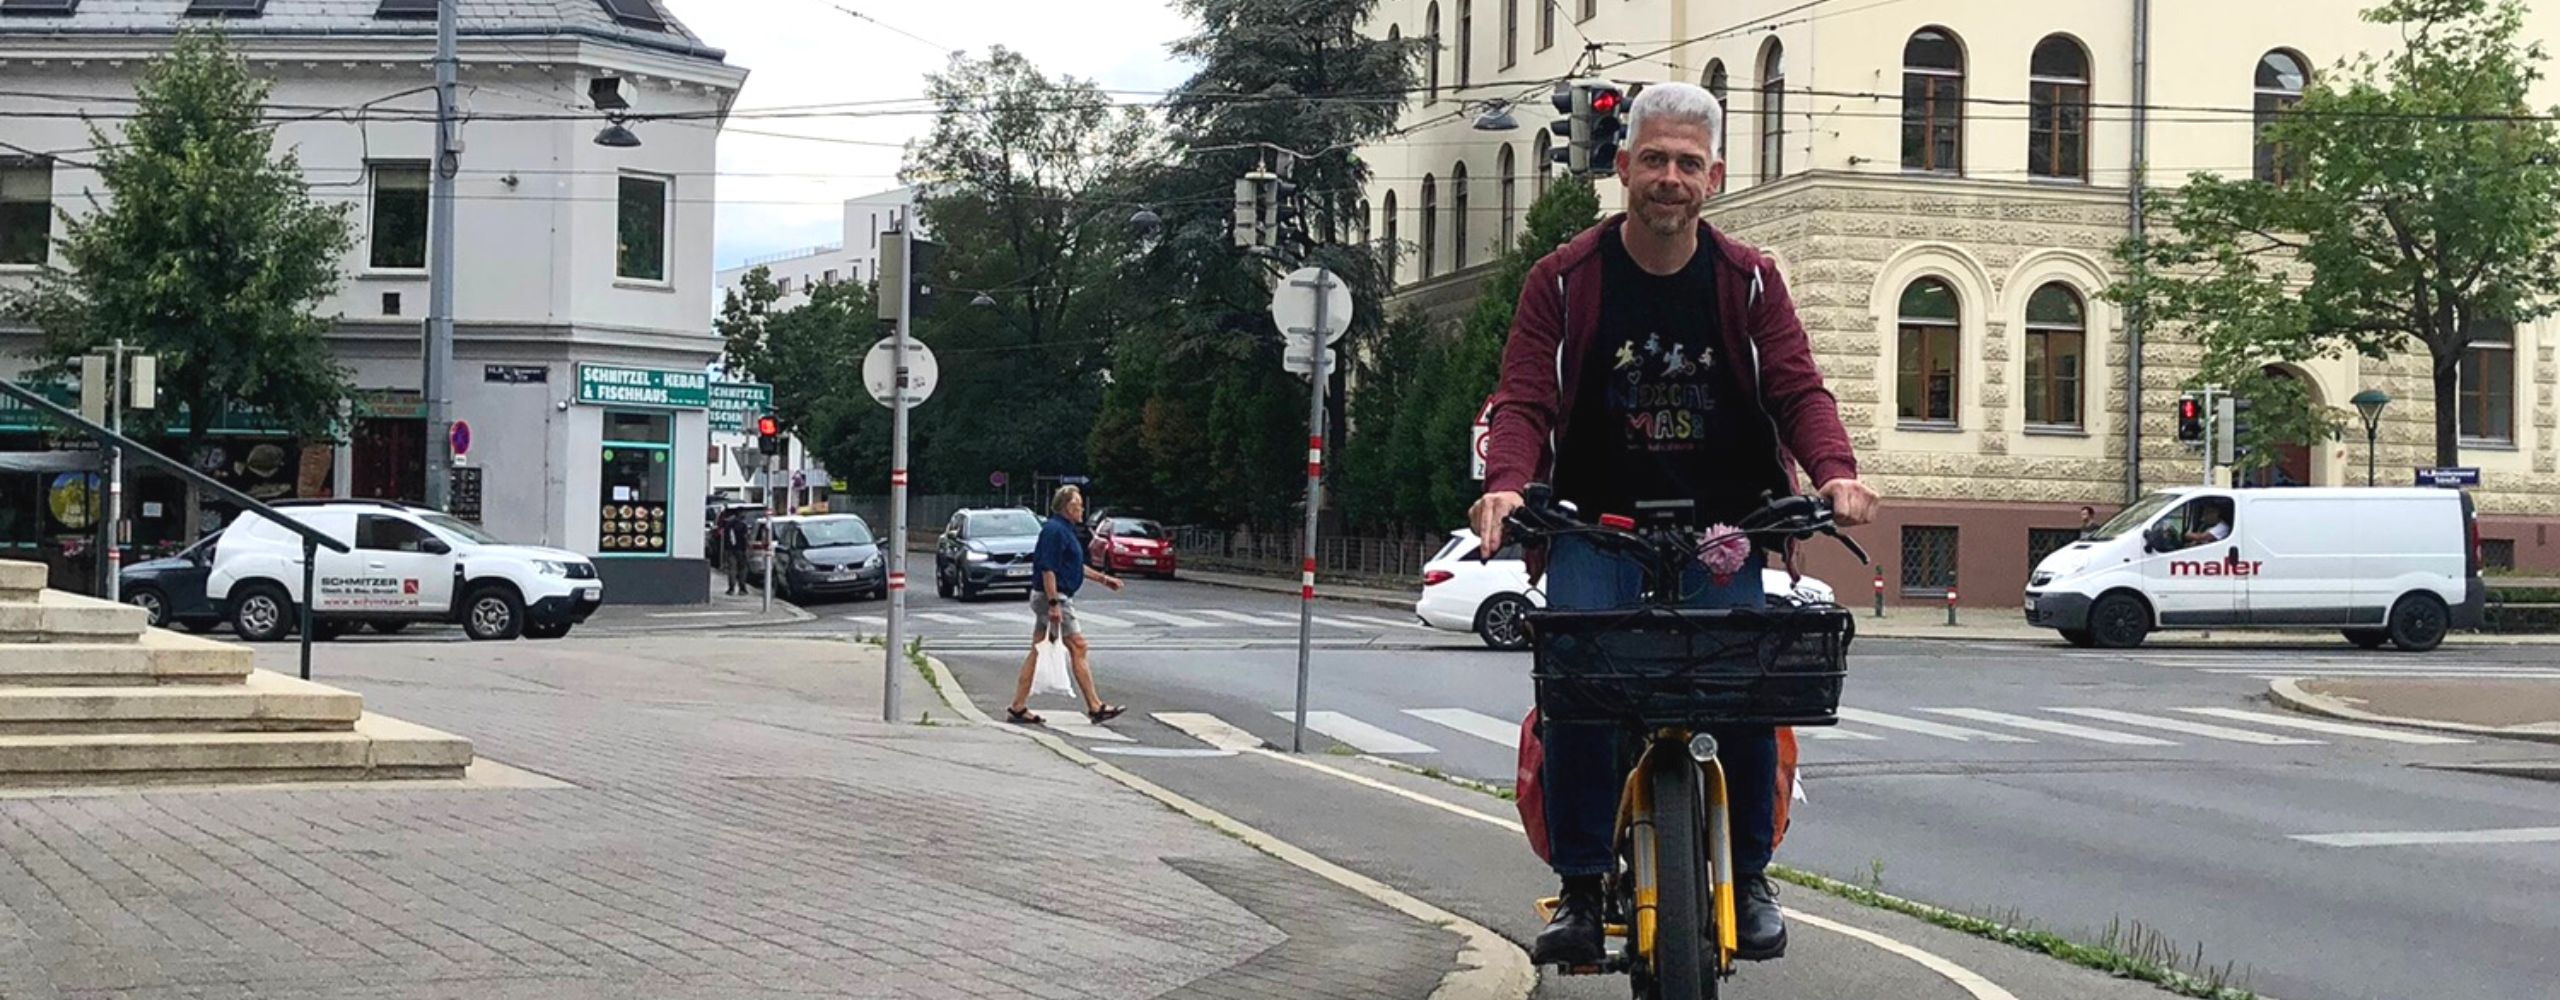 Florian führt mit seinem Long-Tail-Fahrrad am Radweg